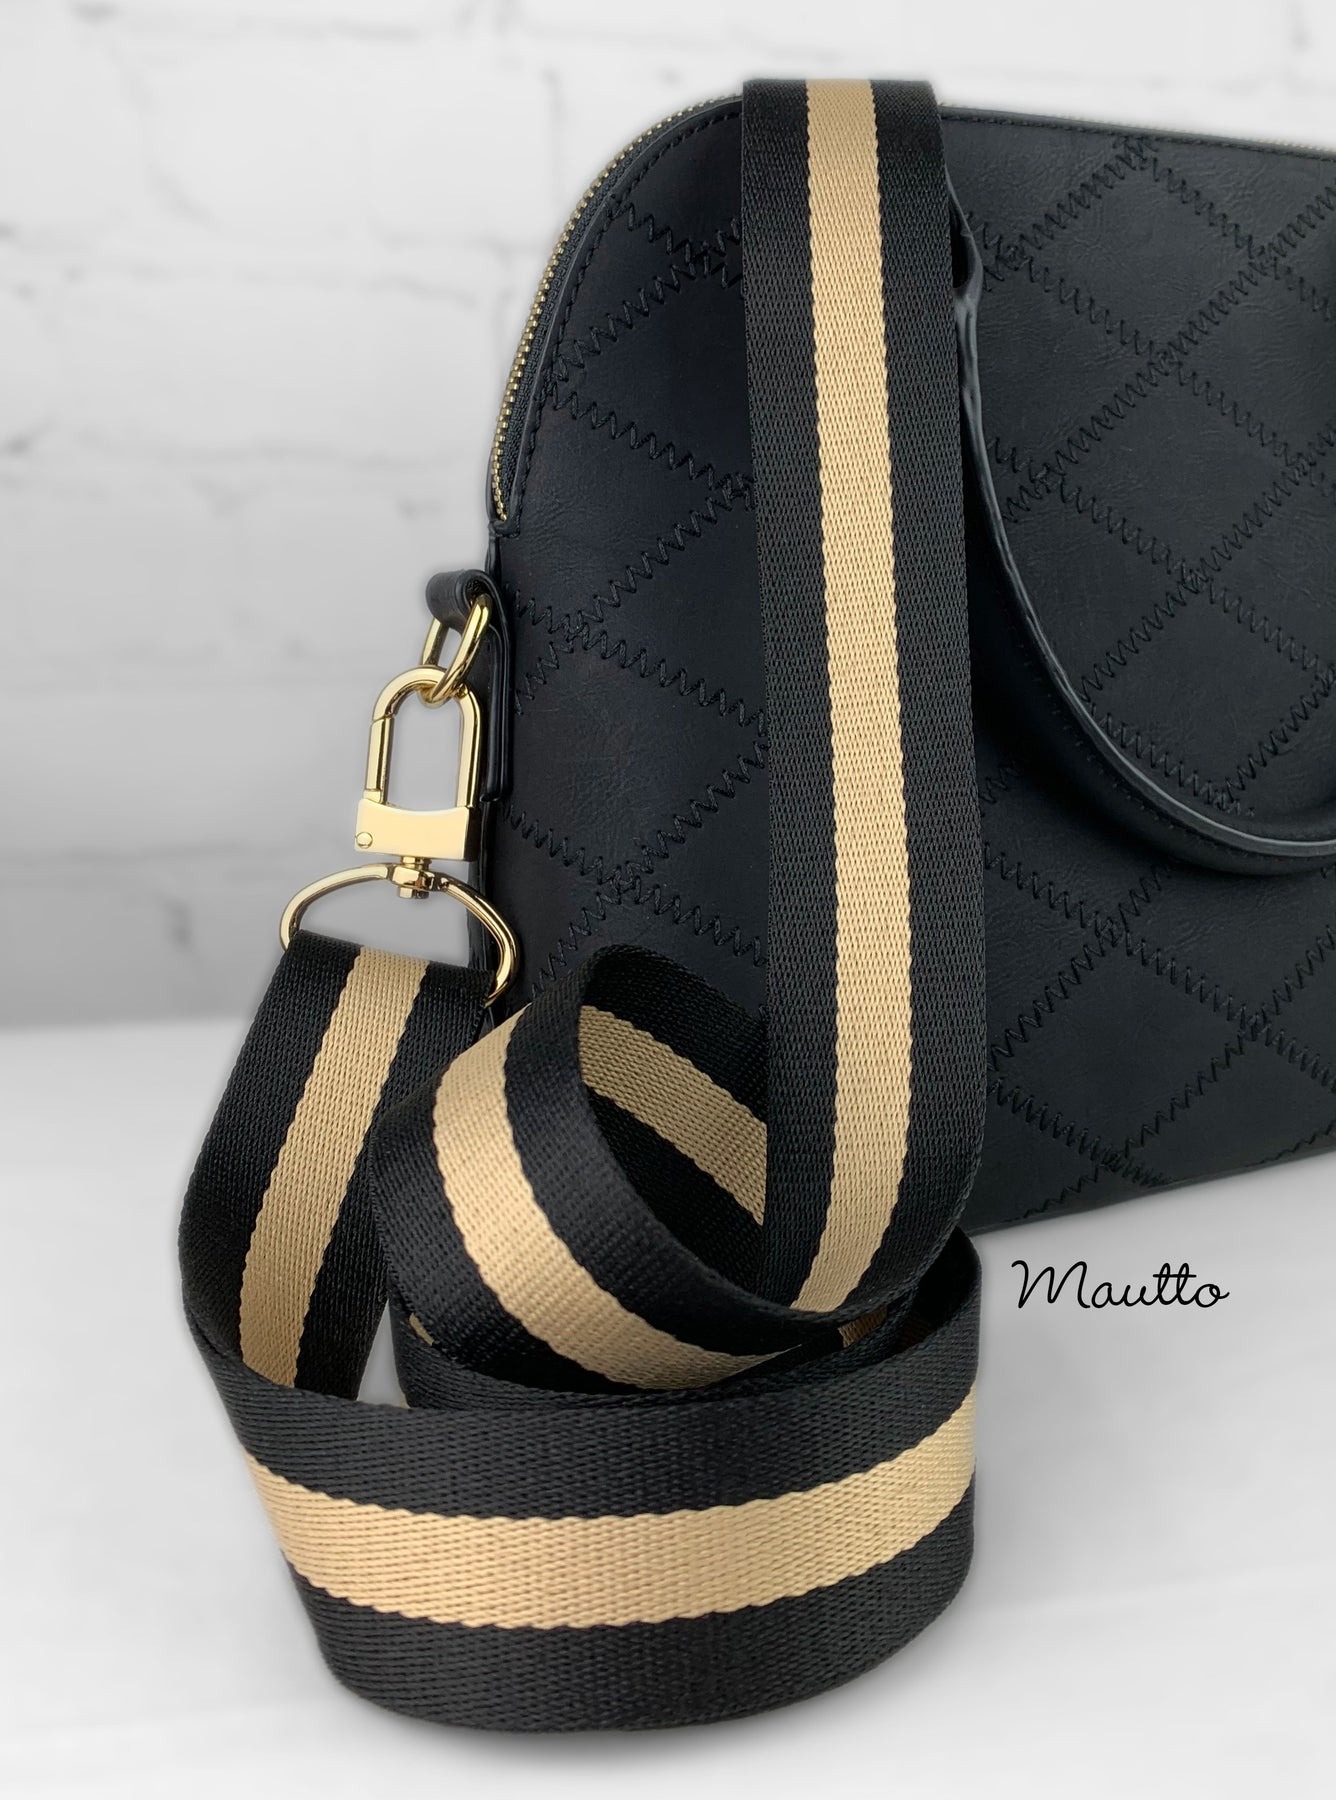 Golden Honey DE Strap for LV Handbags - Wide Comfy Soft Nylon - Adjustable  Length Shoulder to Crossbody Positions